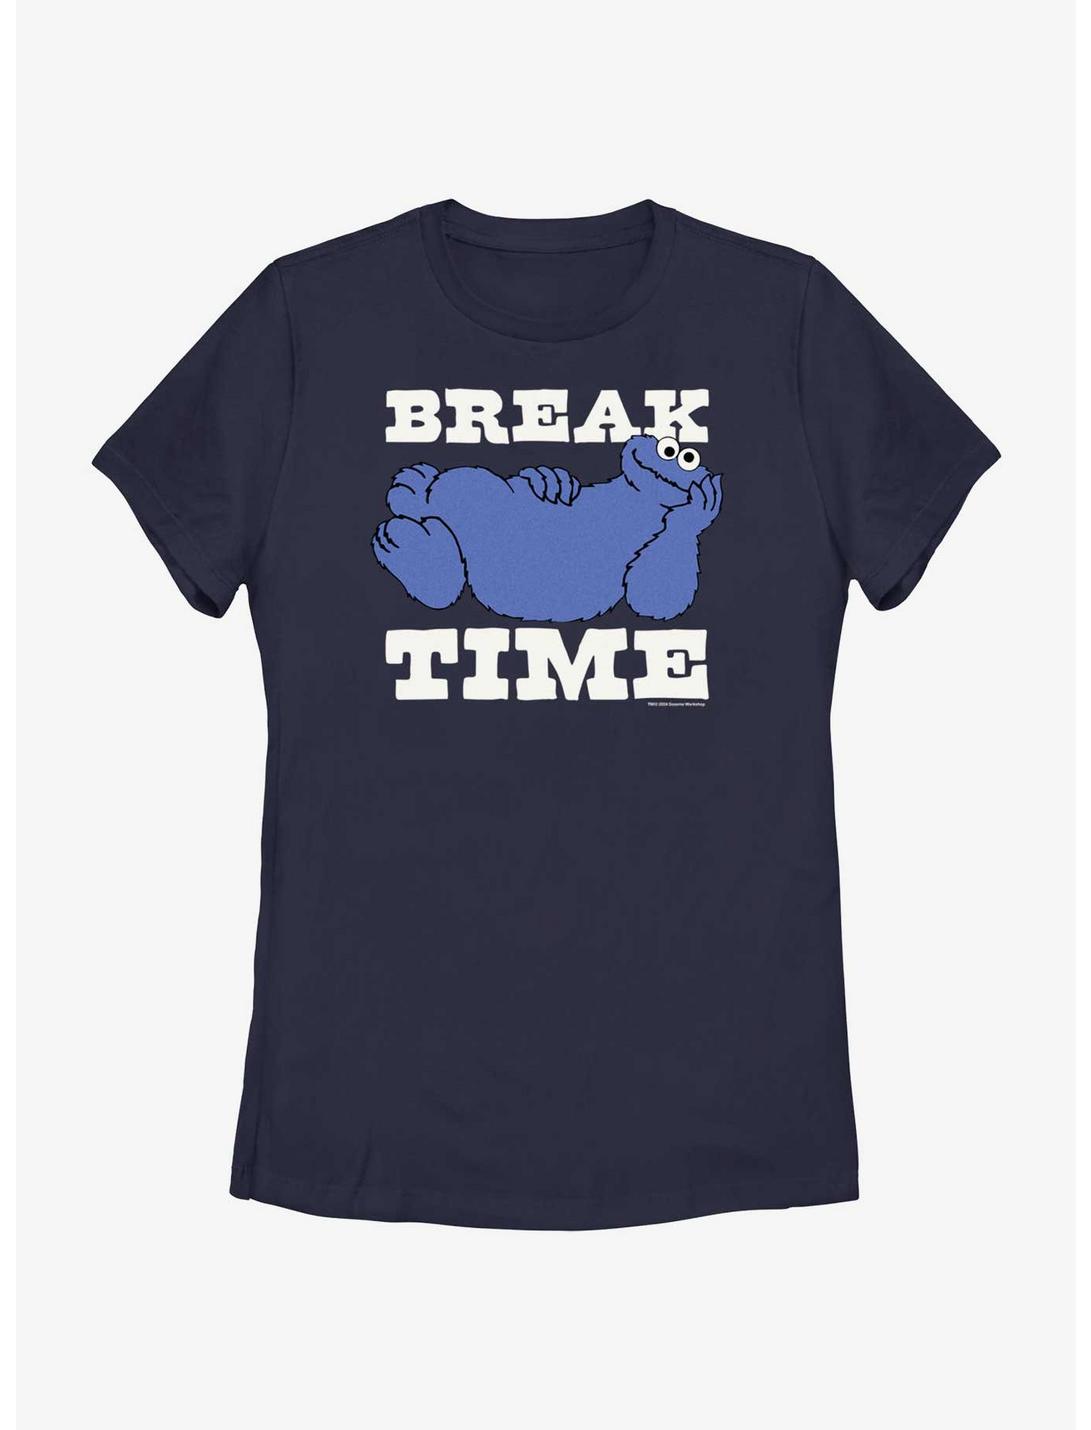 Sesame Street Cookie Monster Break Time Womens T-Shirt, NAVY, hi-res